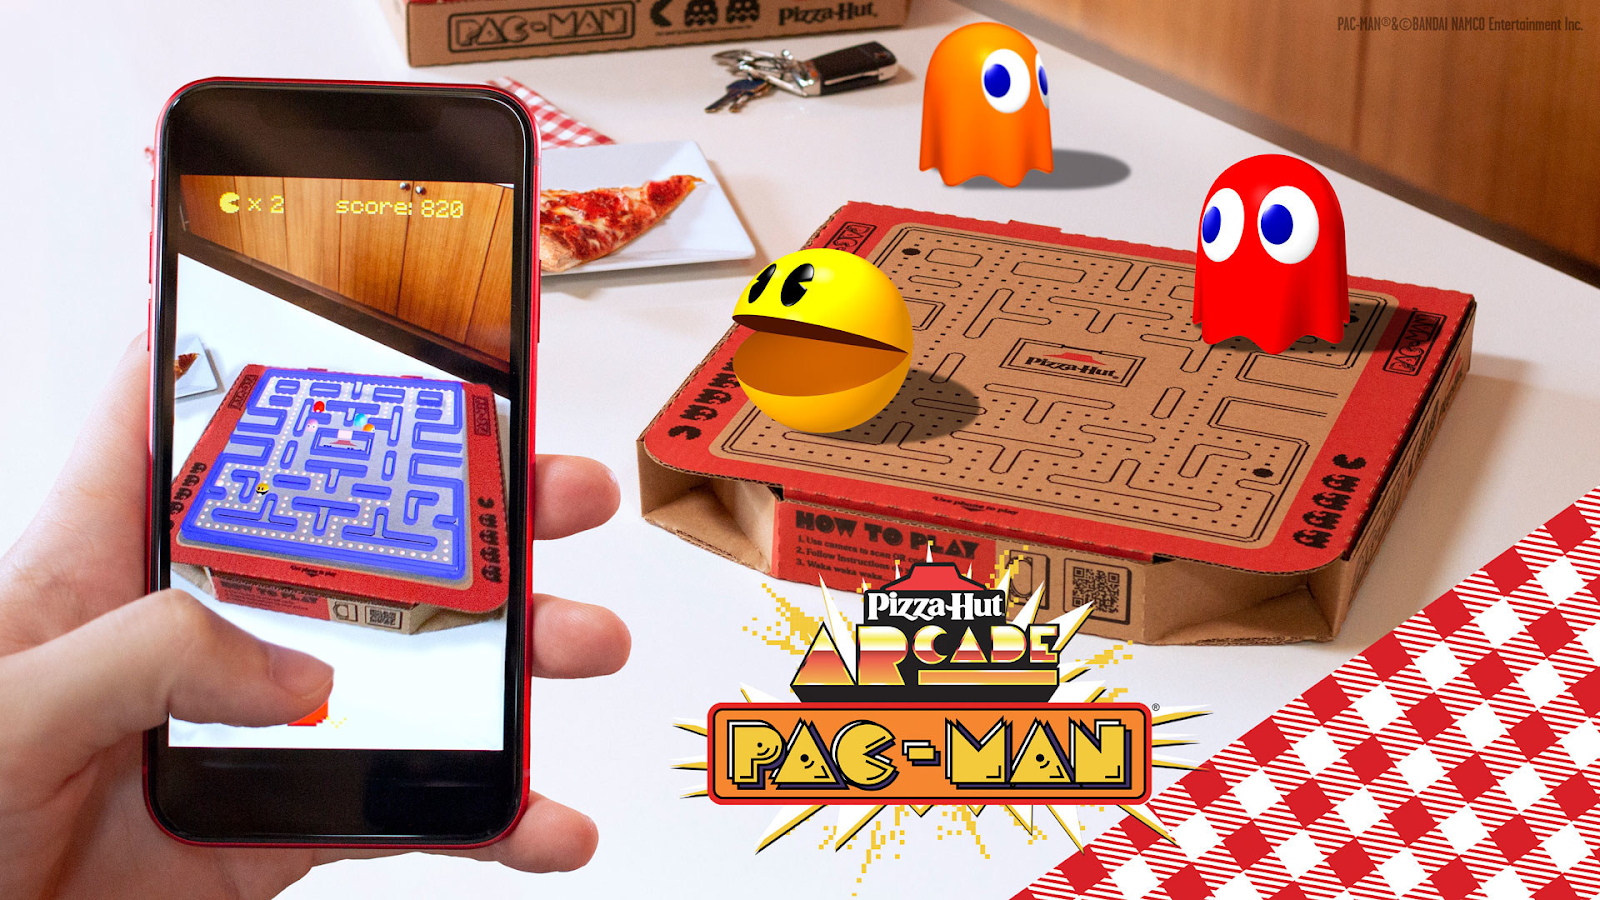 Pac-Man x Pizza Hut collaboration